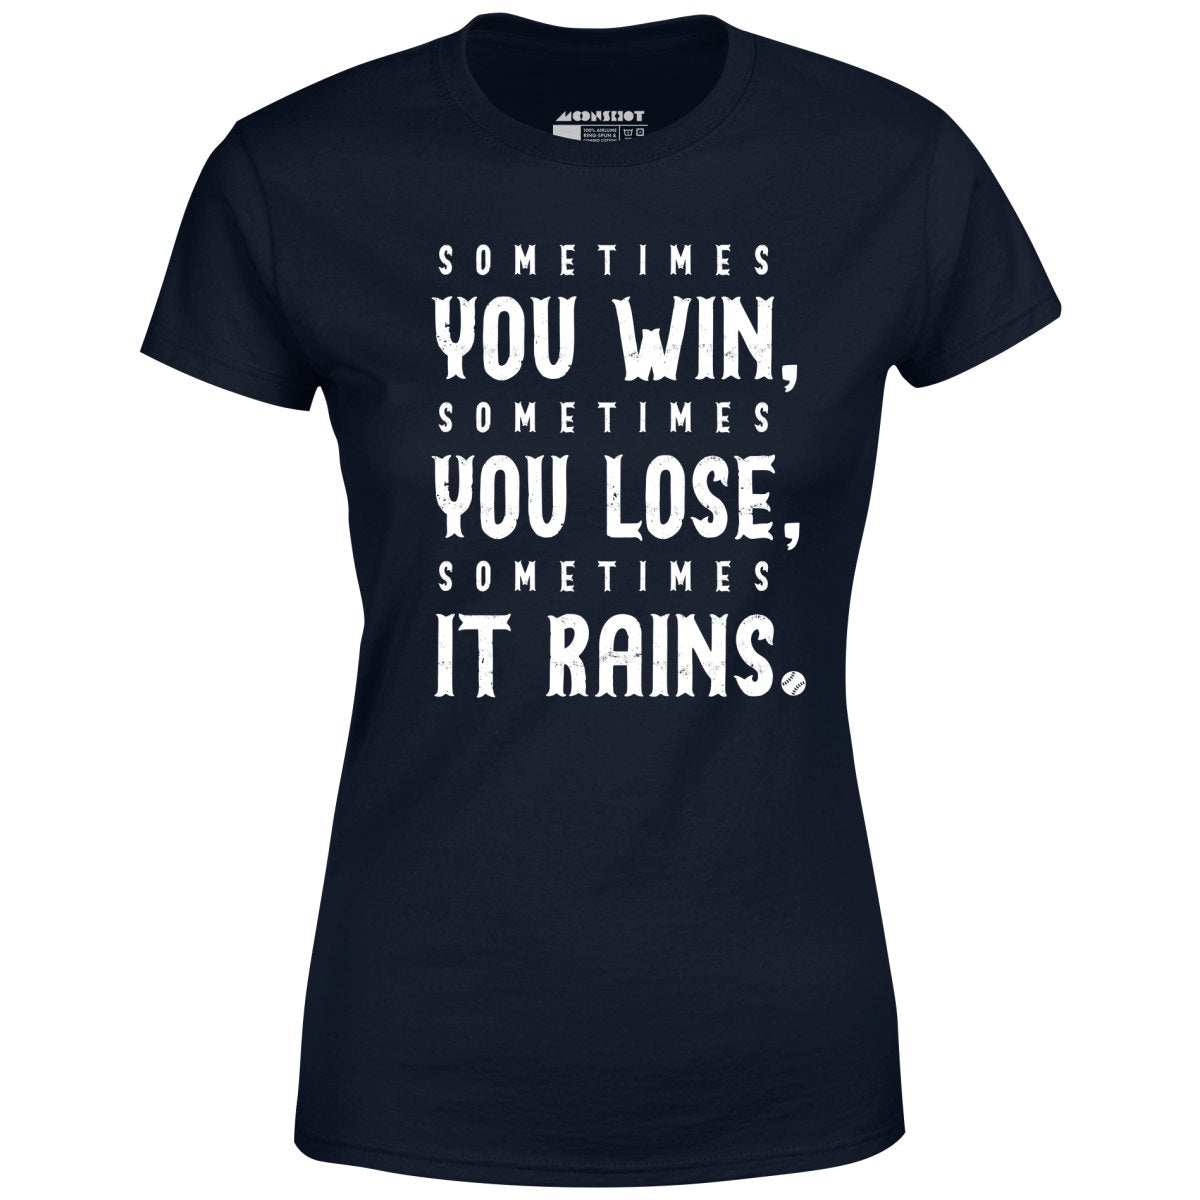 Sometimes it Rains - Bull Durham - Women's T-Shirt